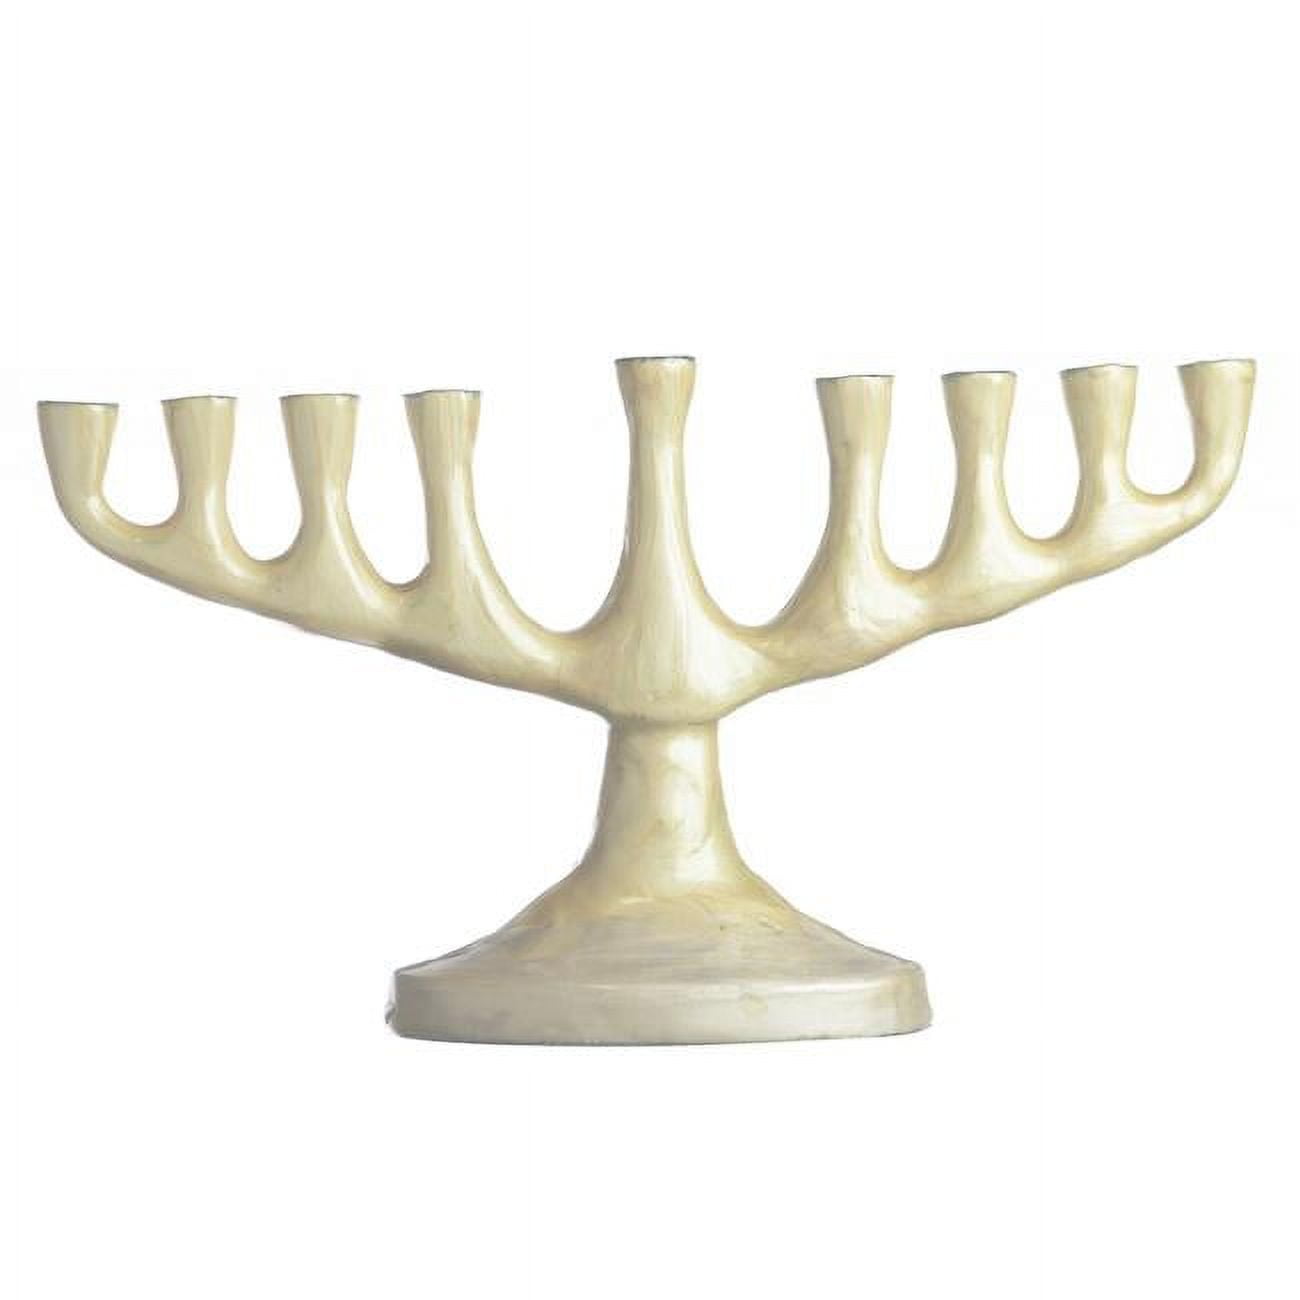 Picture of A&M Judaica & Gifts 59074 5.5 x 10 in. Stainless Steel Hanukkah Menorah, Pearl